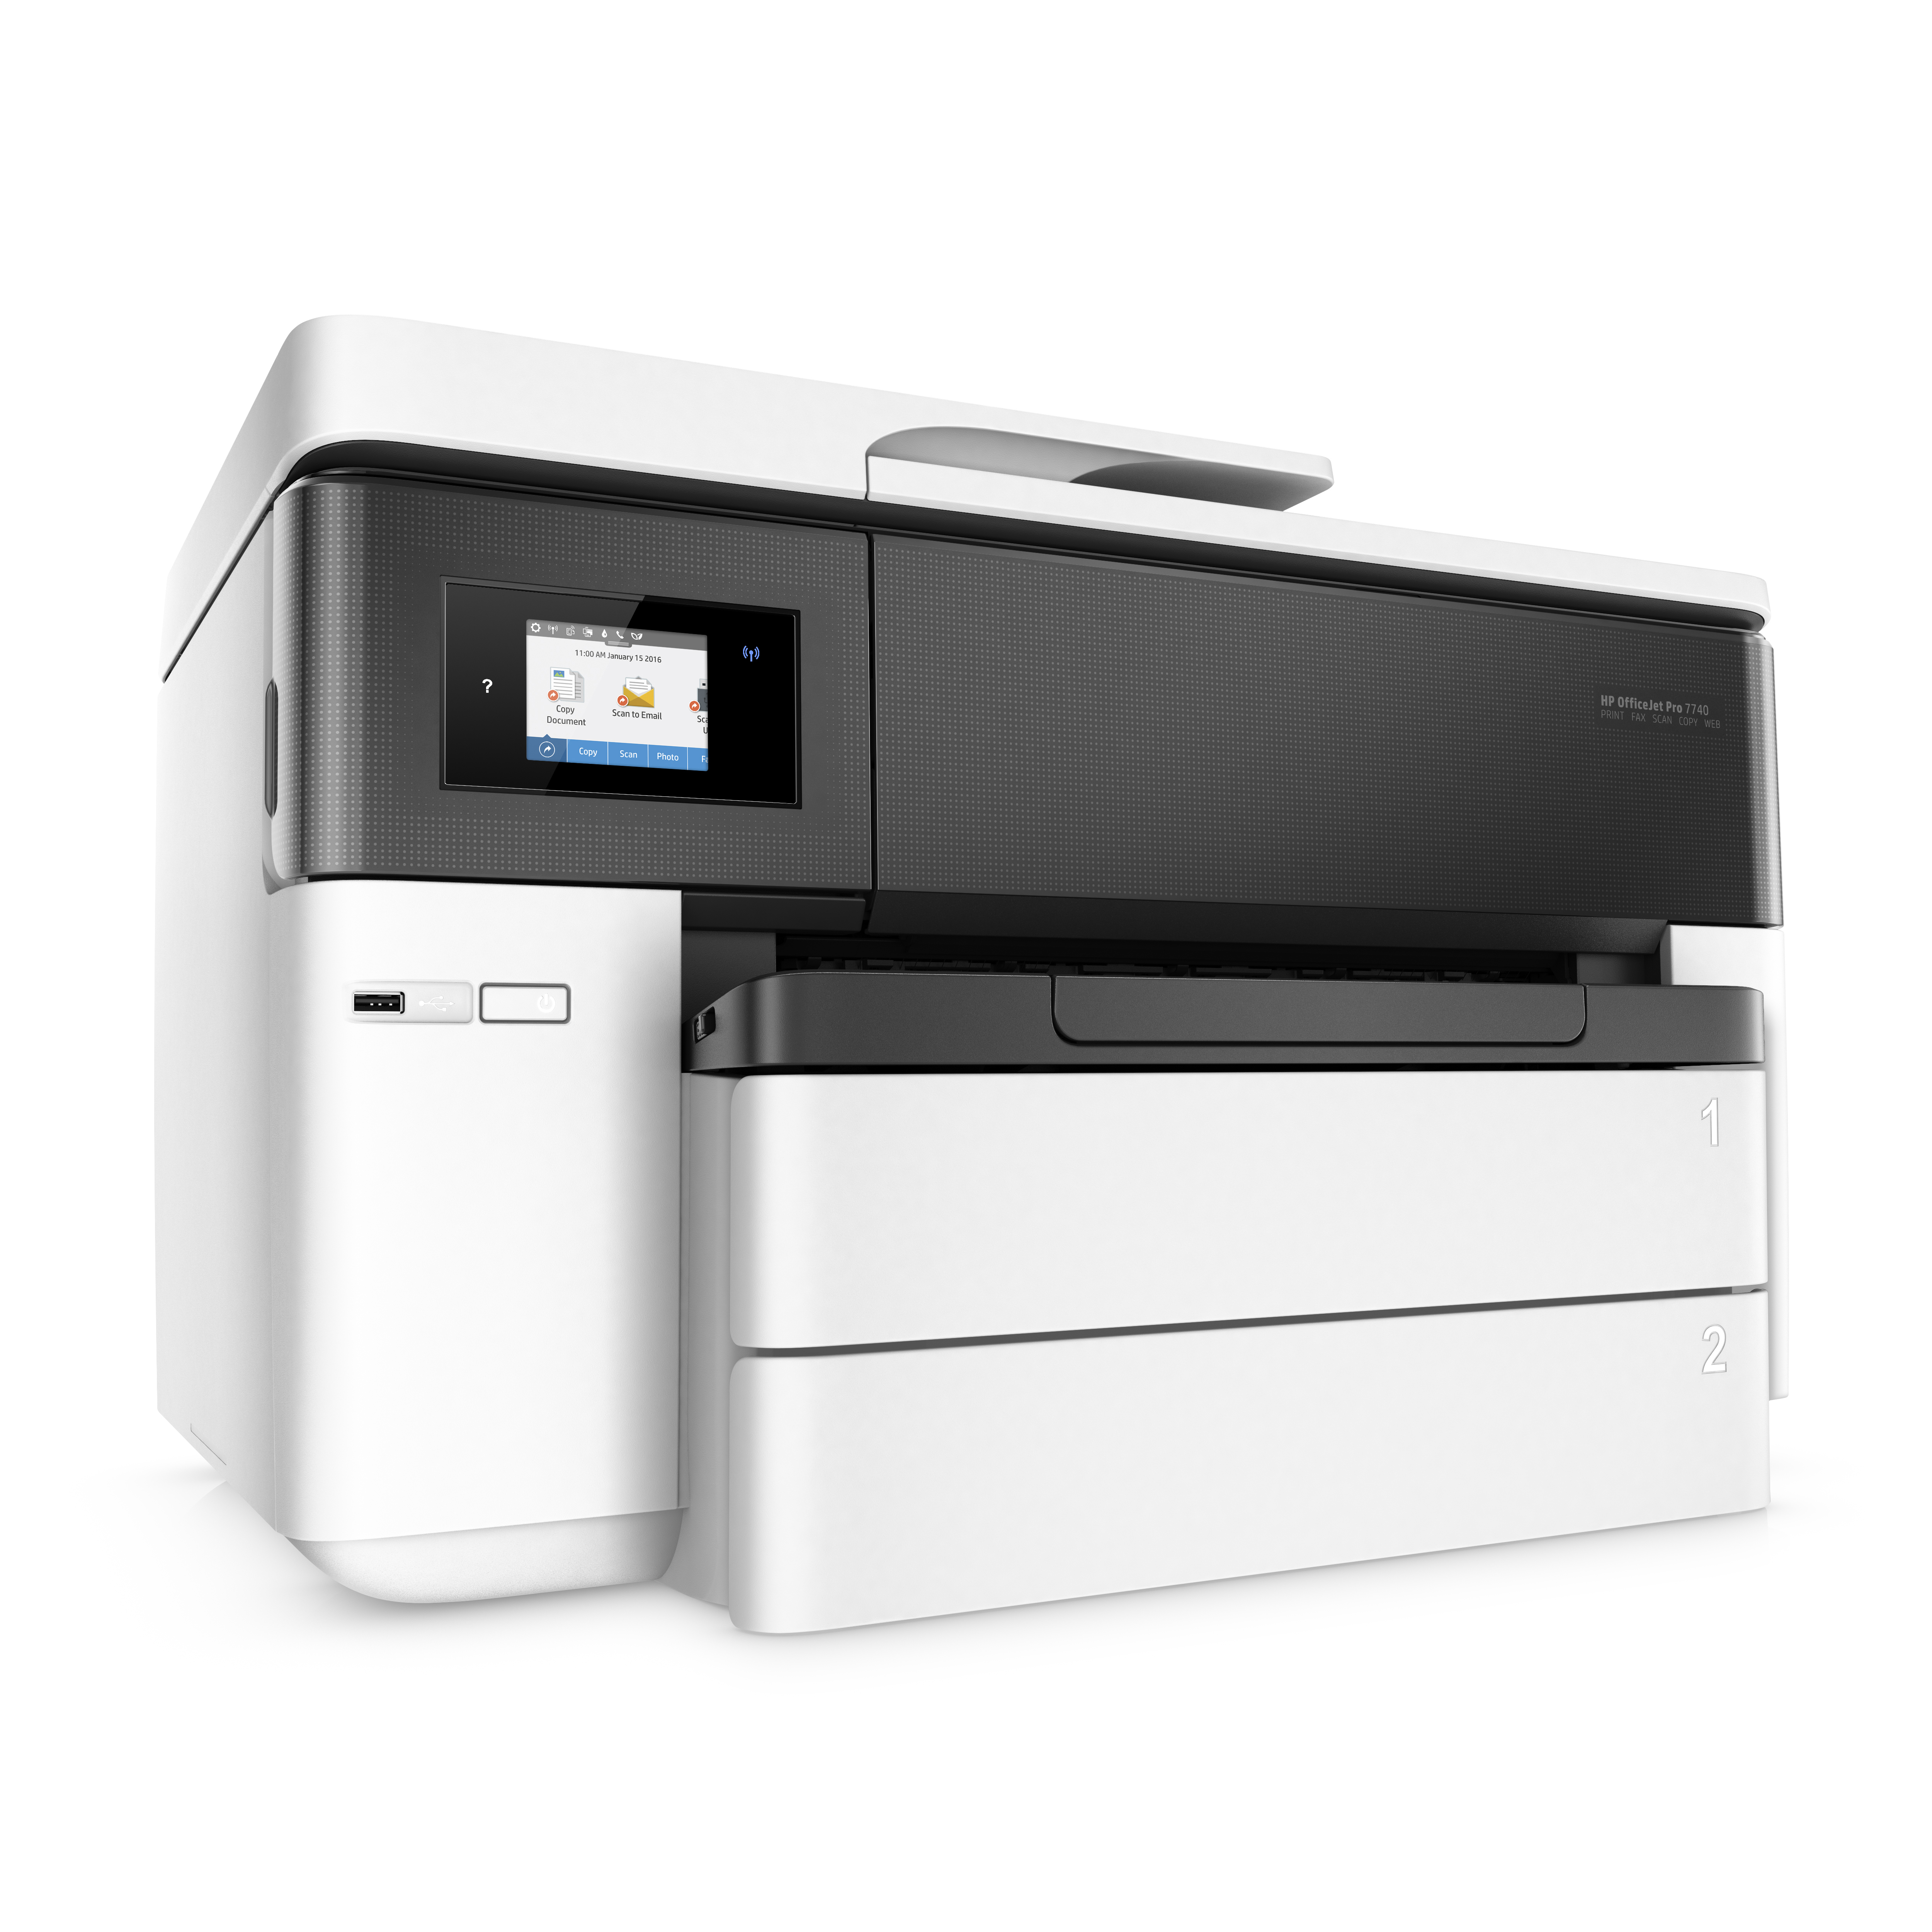 4-in-1 Netzwerkfähig 7740 HP HP Tintenstrahldruck WLAN OfficeJet Pro Großformat-Multifunktionsdrucker